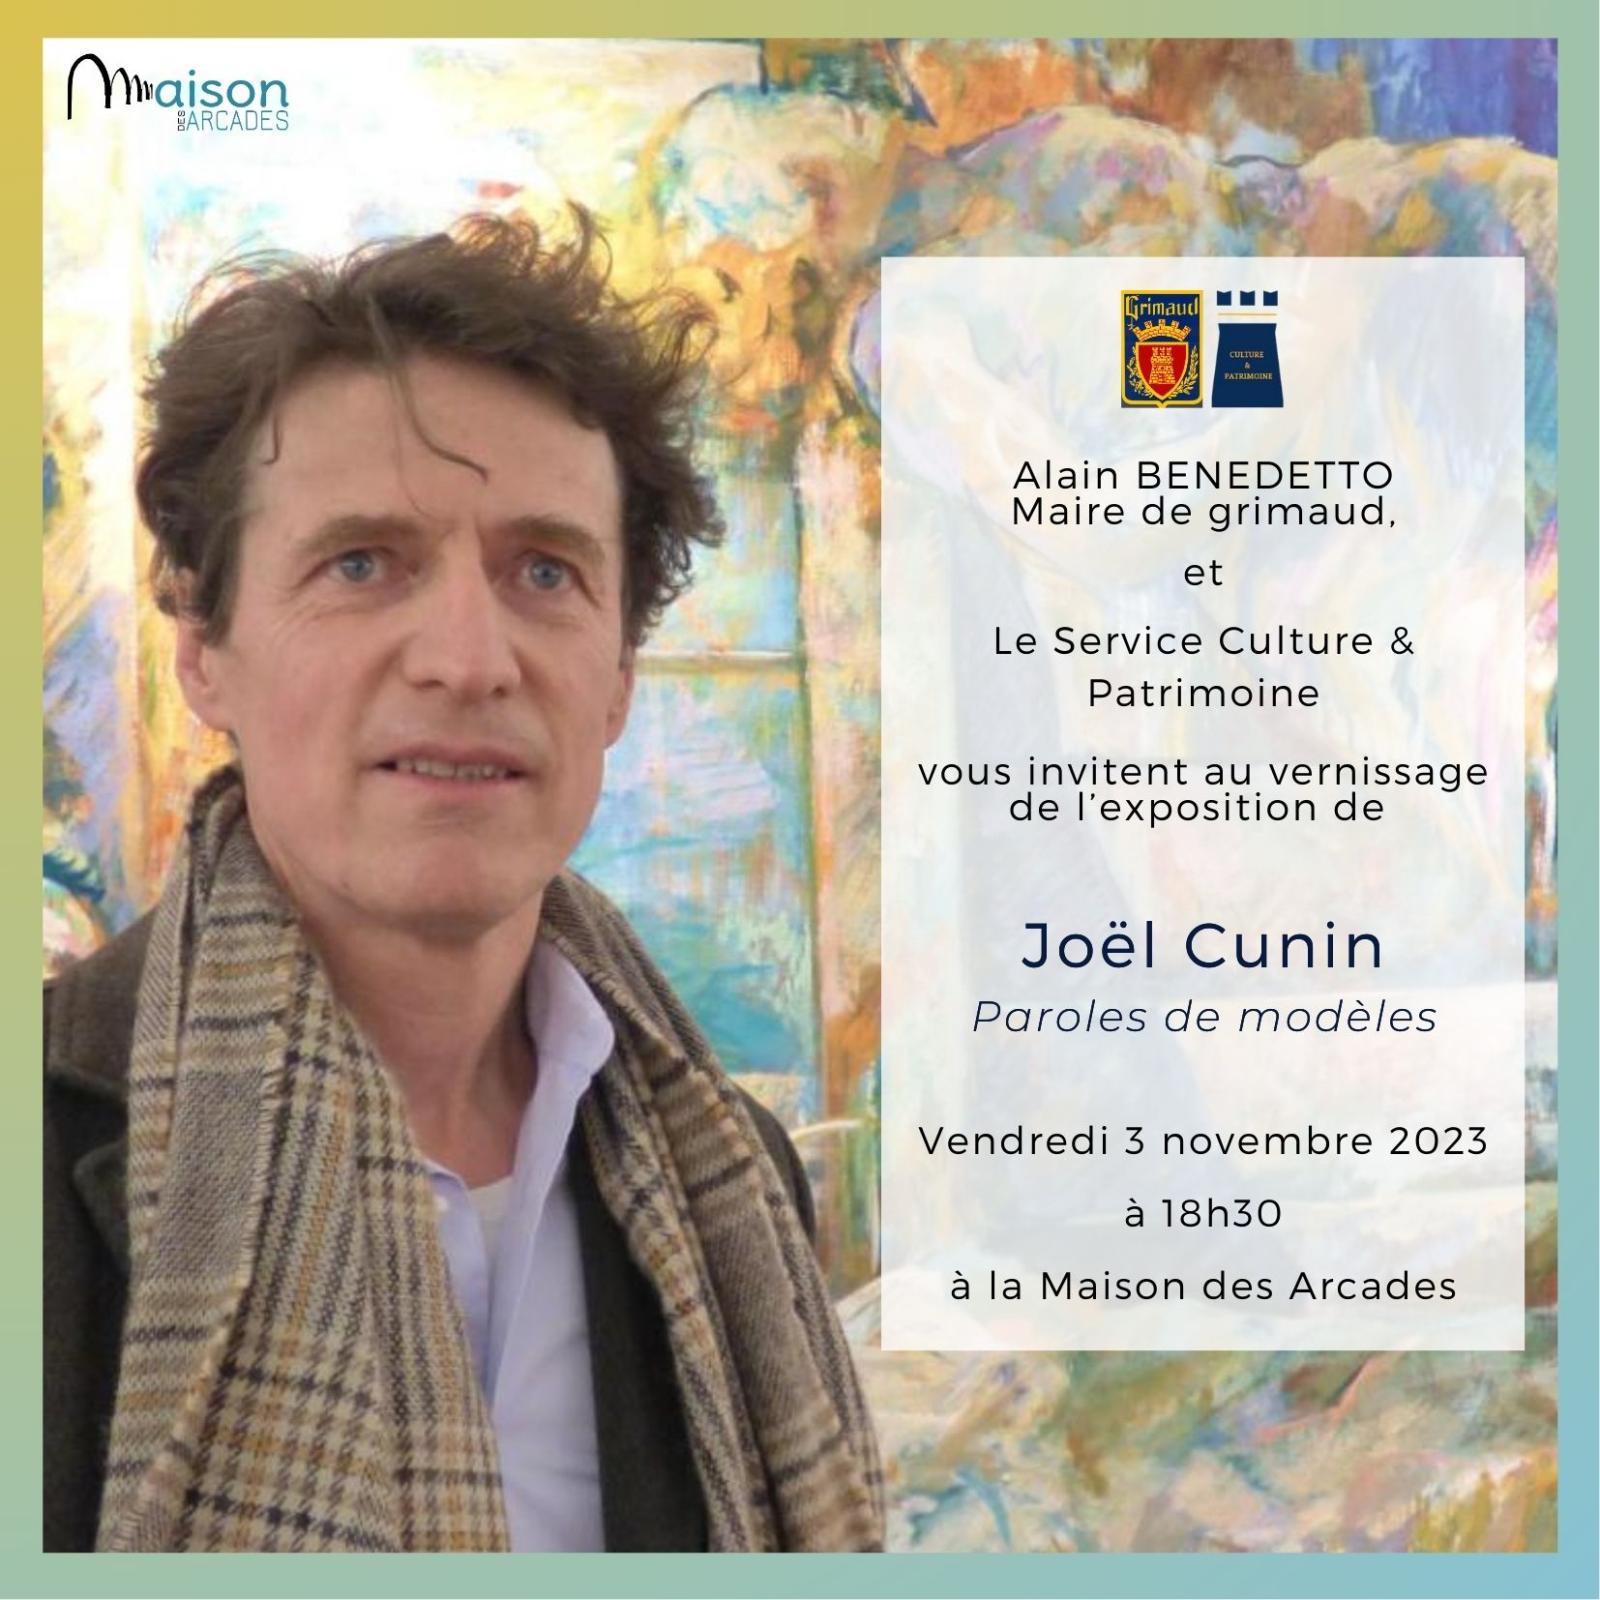 Friday November 3, 2023 - Joël CUNIN exhibition opening